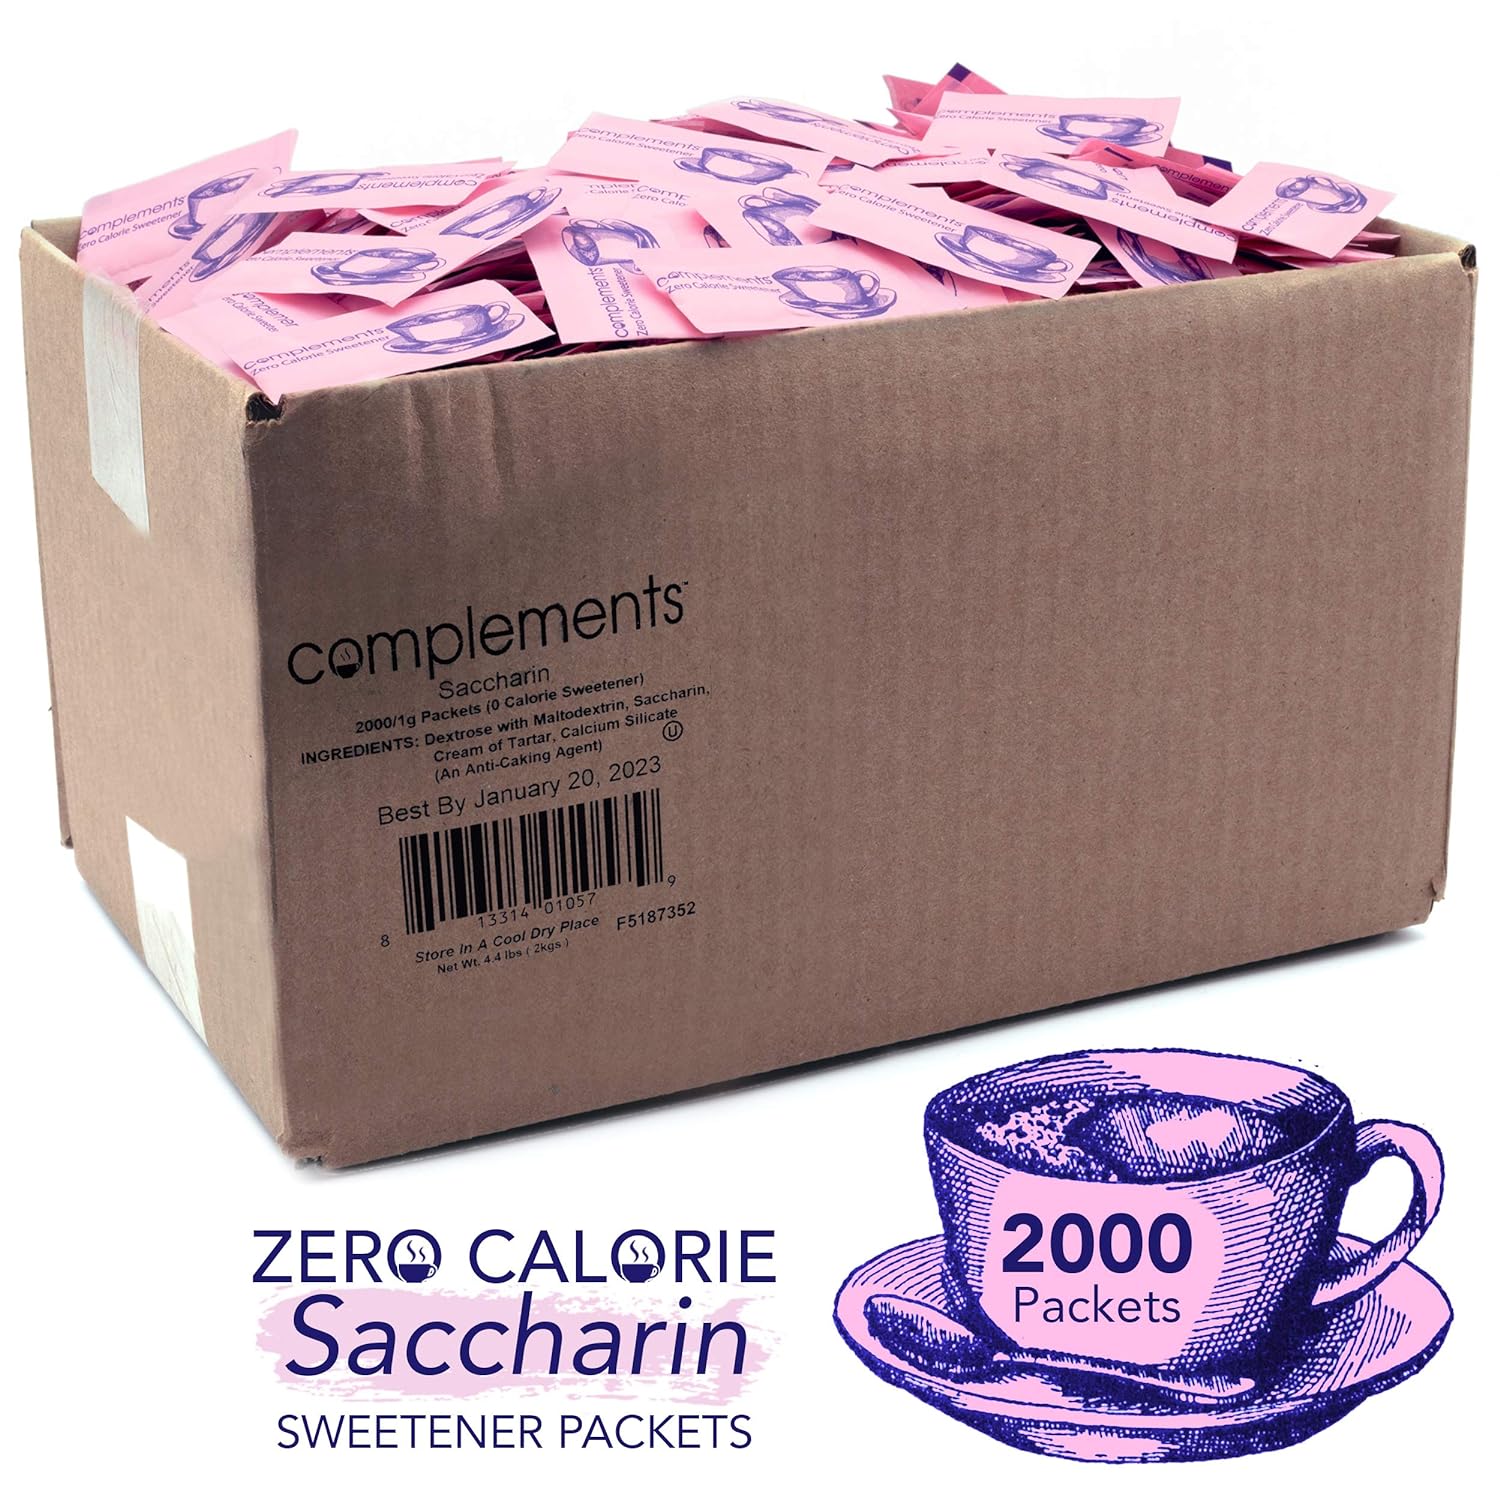 Complements Zero Calorie Saccharin Pink Sweetener Packets, 2